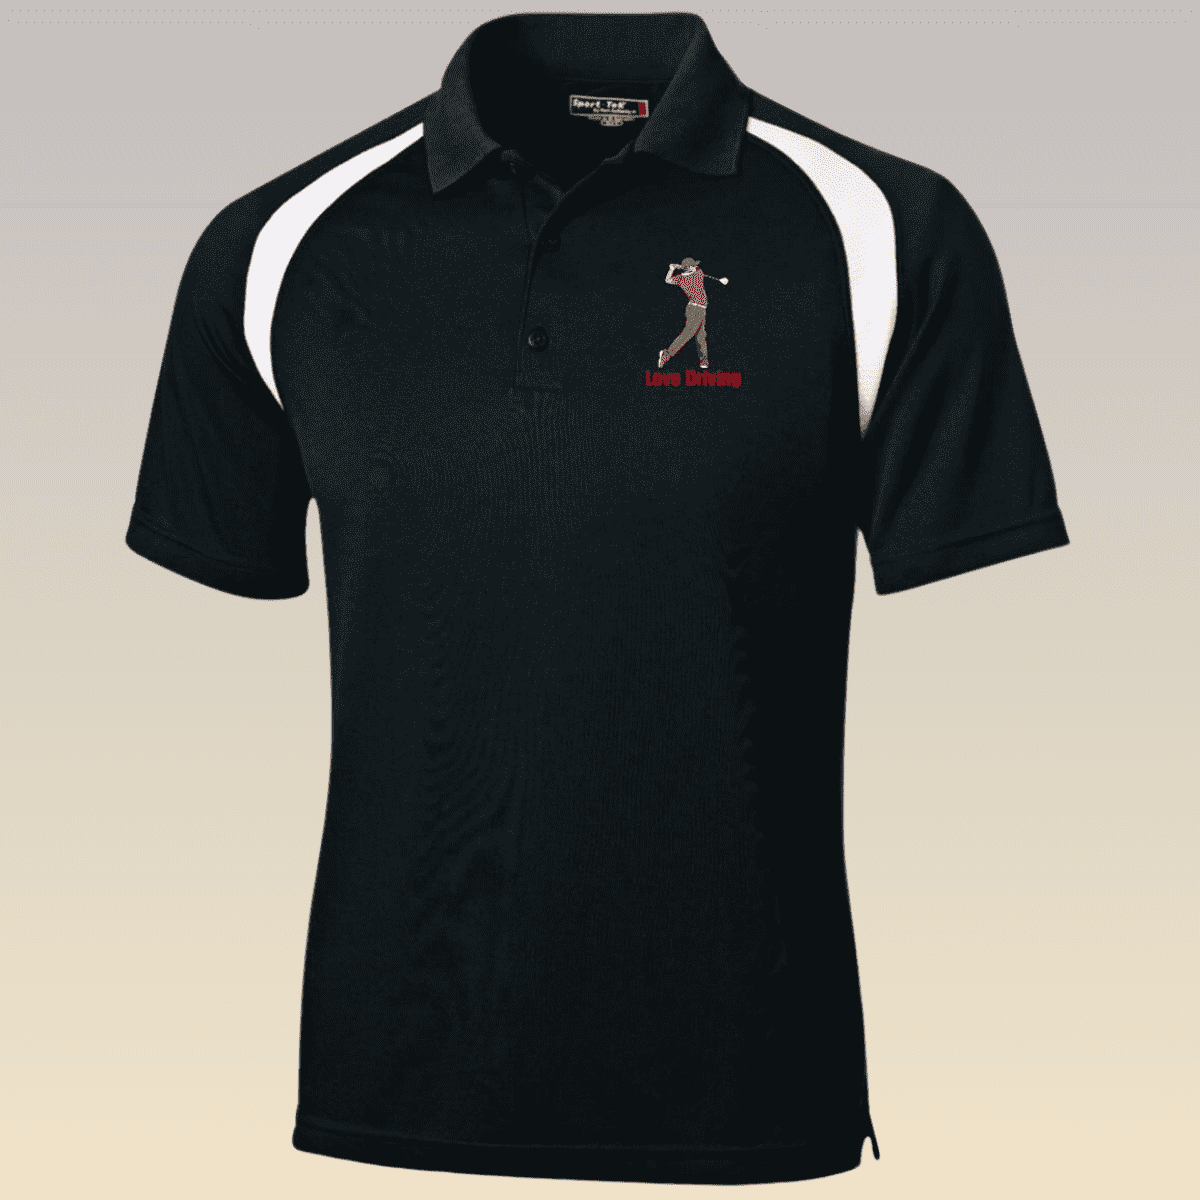 Men's Black and White Golf Love Driving Moisture-Wicking Polo Shirt